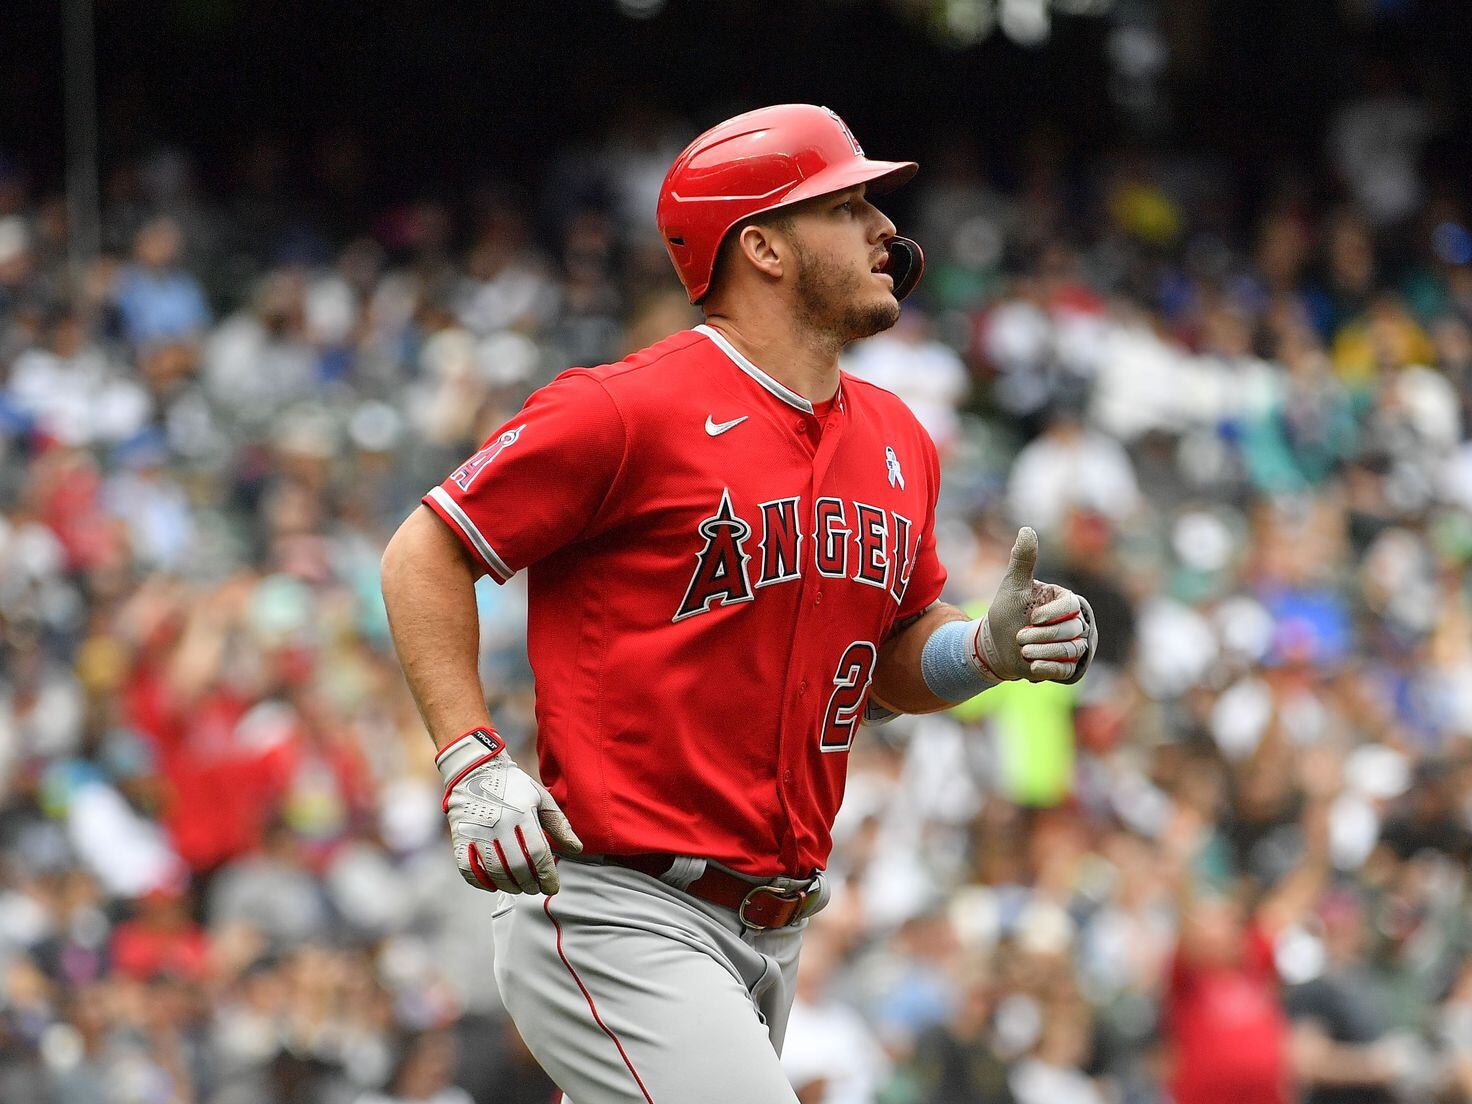 Los Angeles Angels' Taylor Ward proves baseball is game of streaks